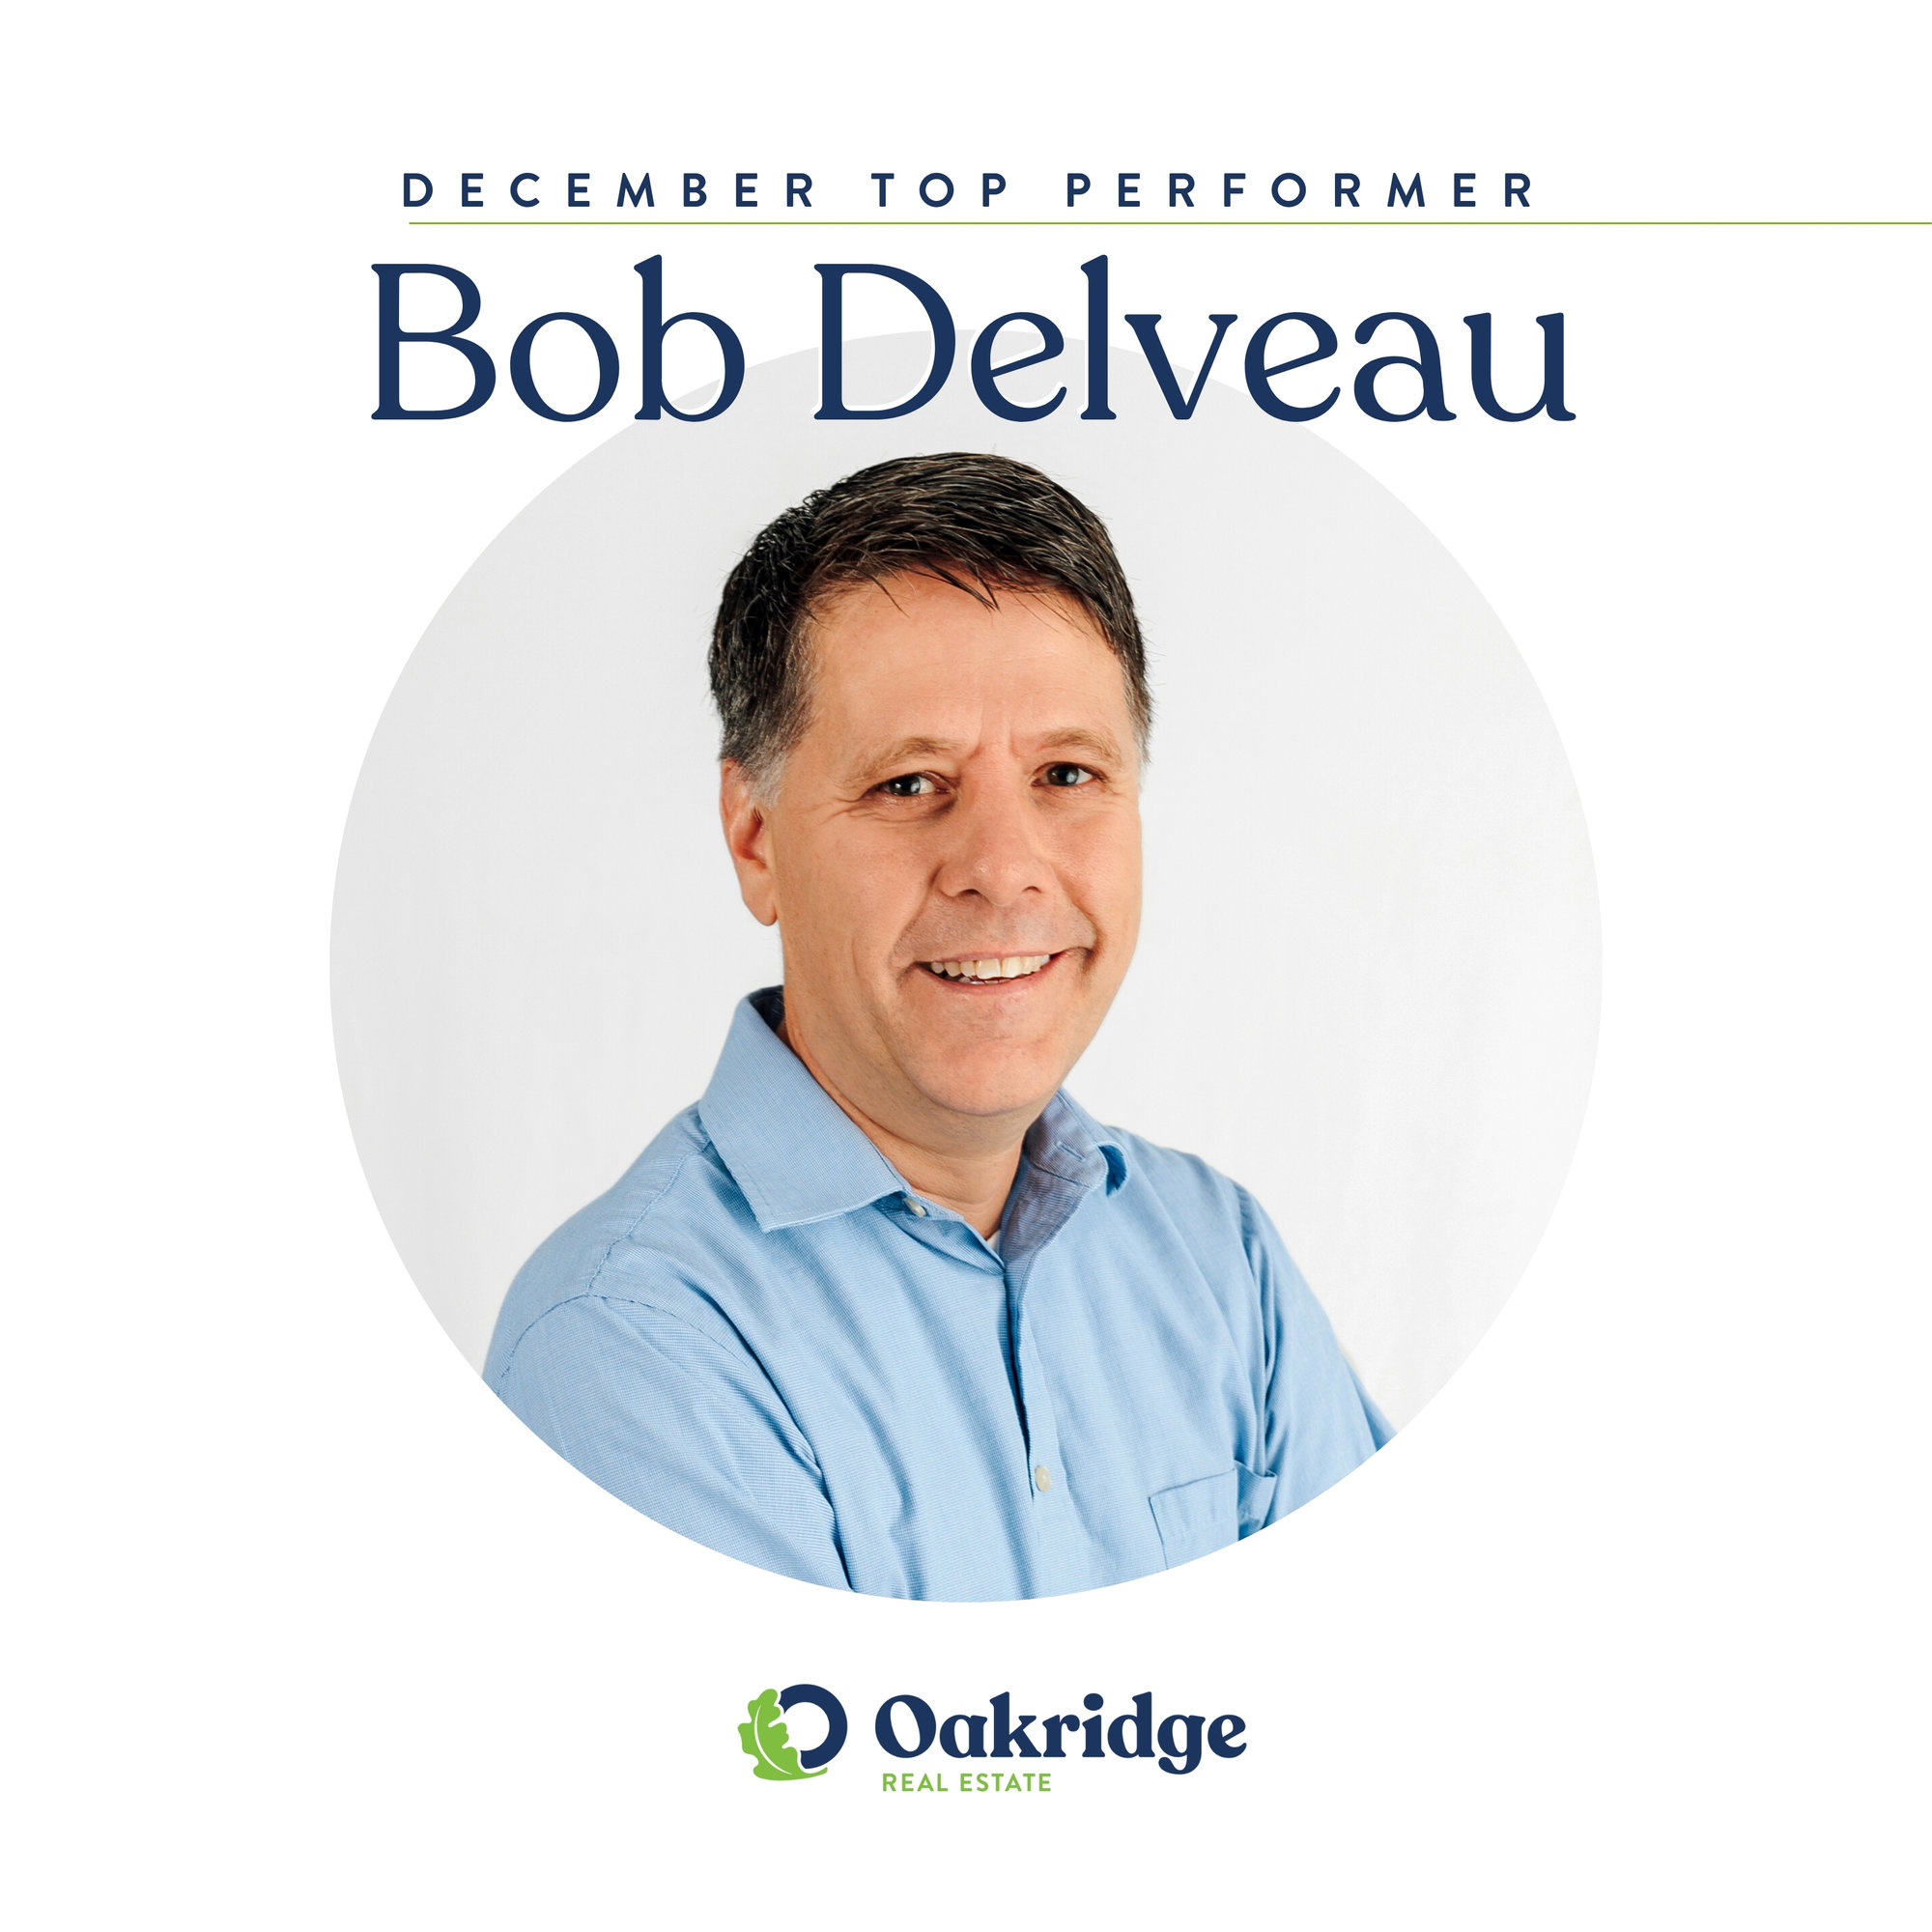 bob delveau oakridge real estate december top performer 